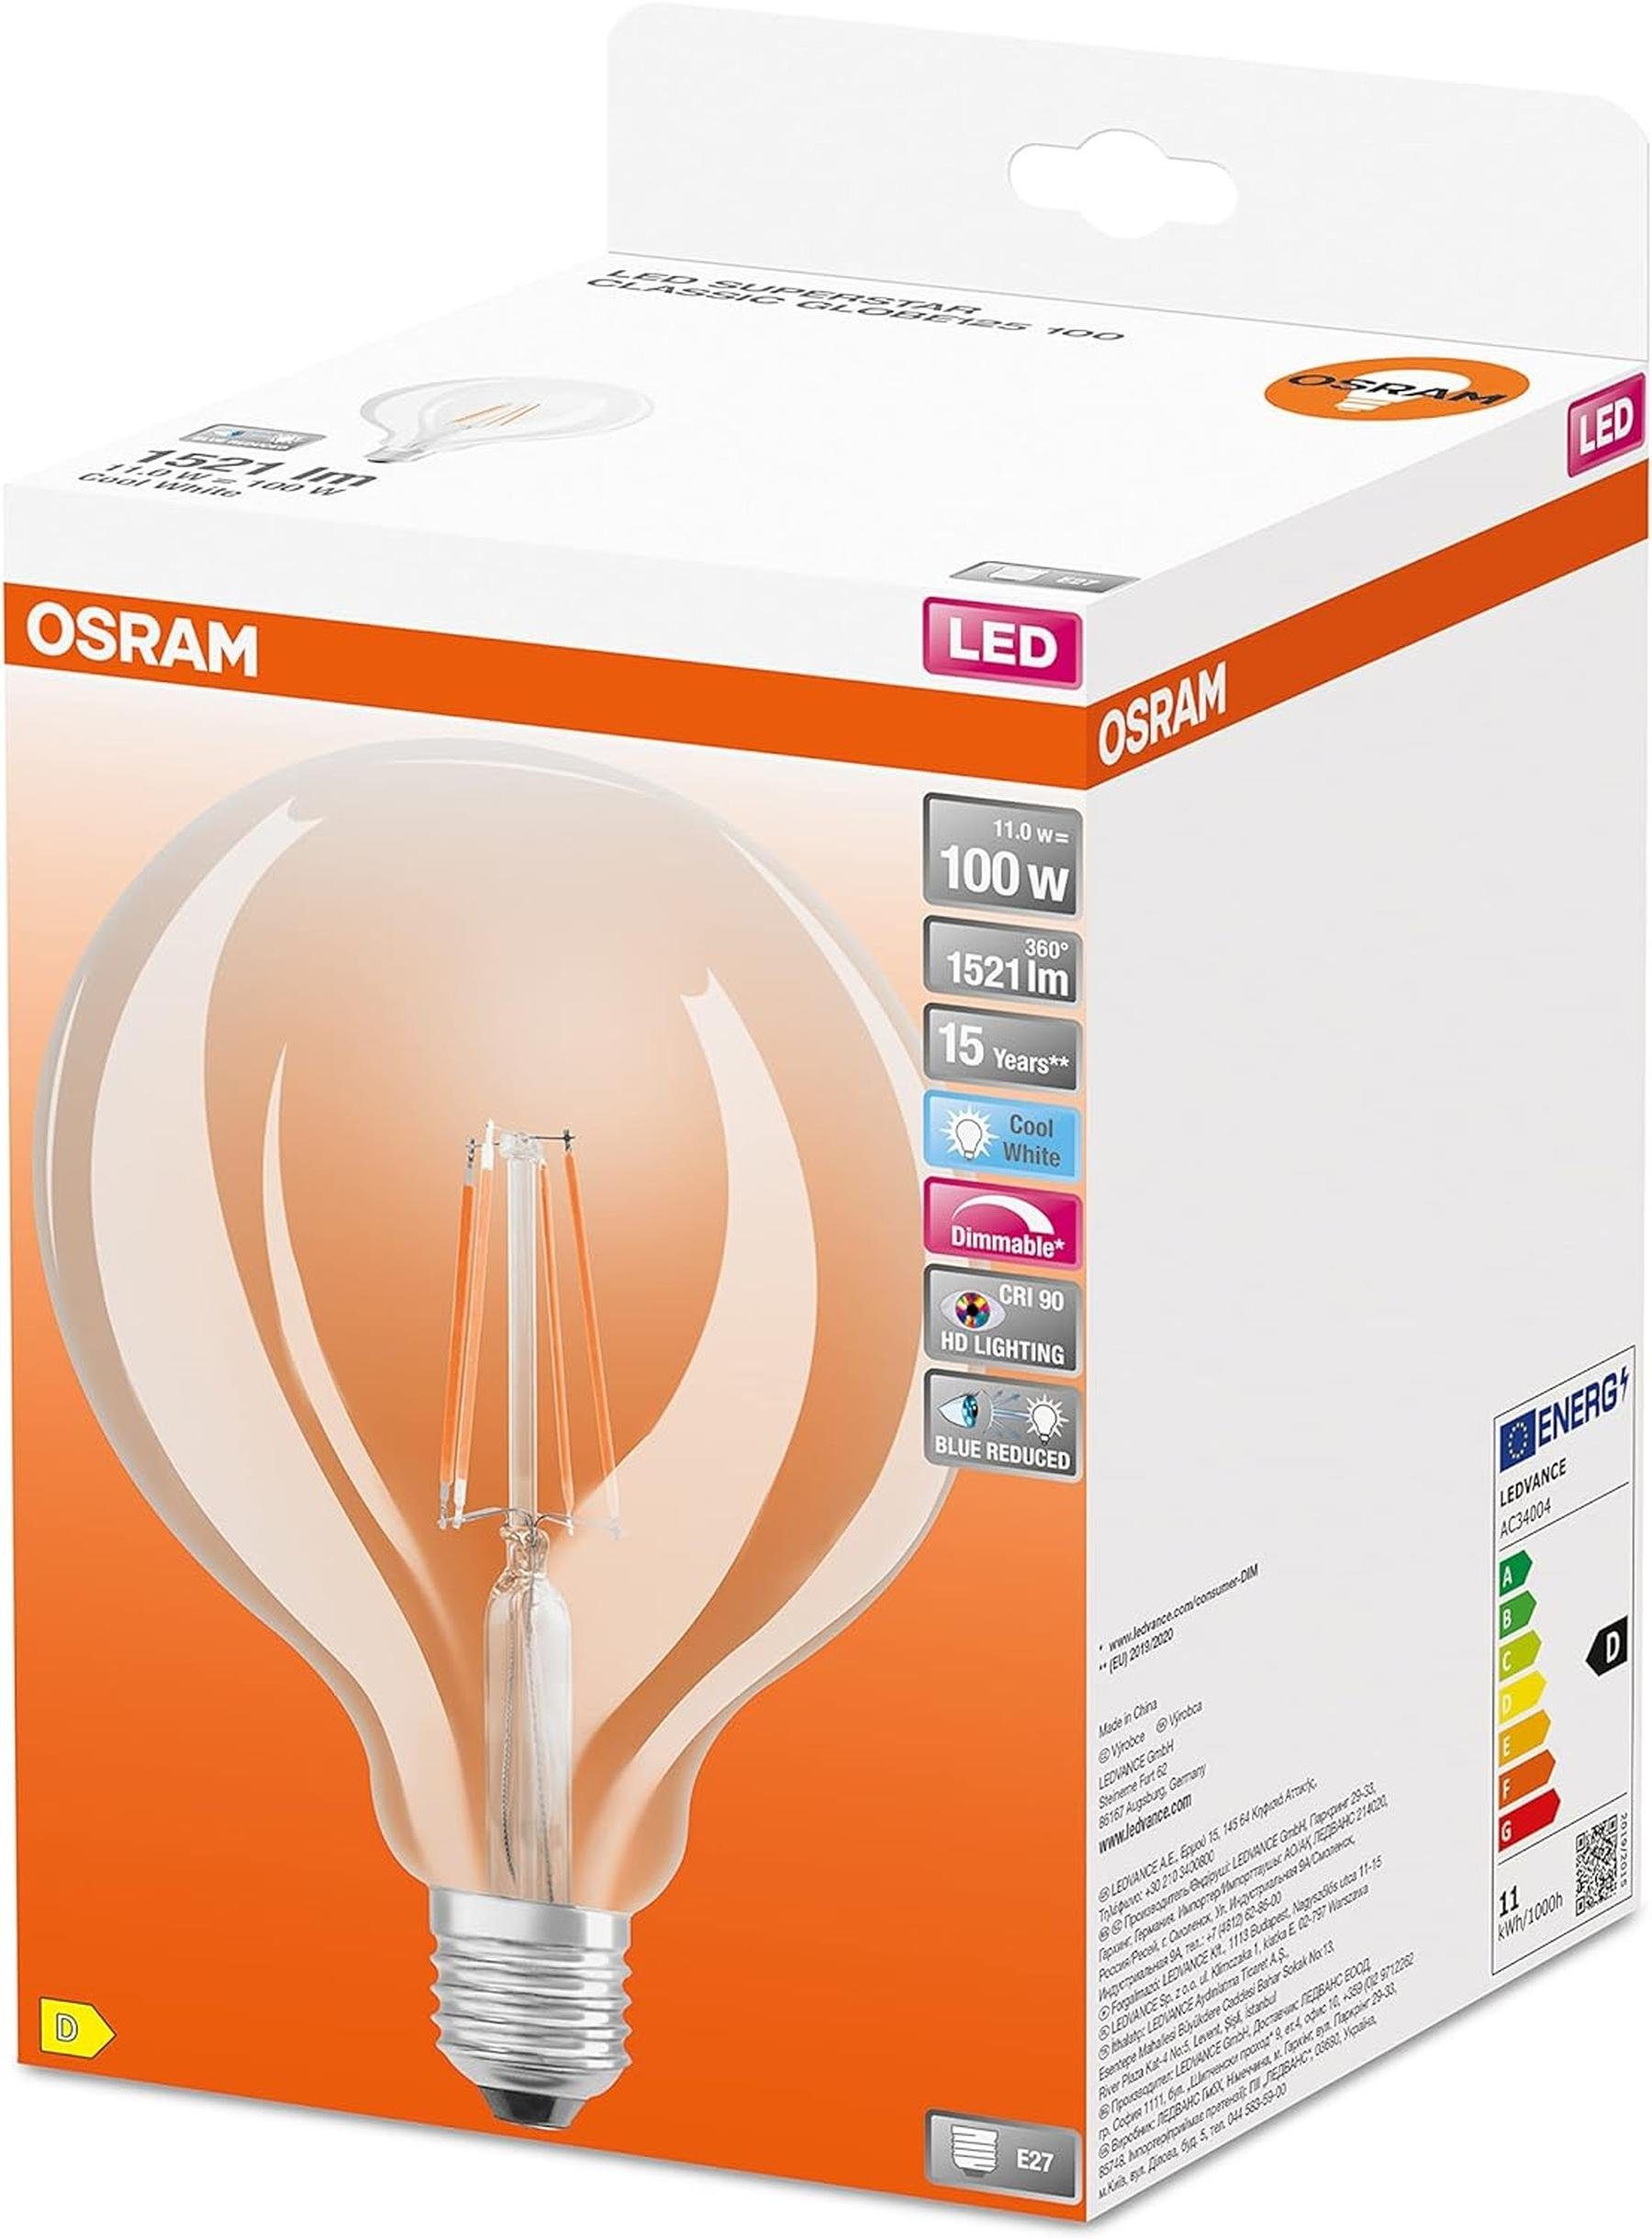 Osram Superstar Kaltweiß, OSRAM Filament-Optik LED-Lampe LED-Leuchtmittel E27, dimmbare 2ER,